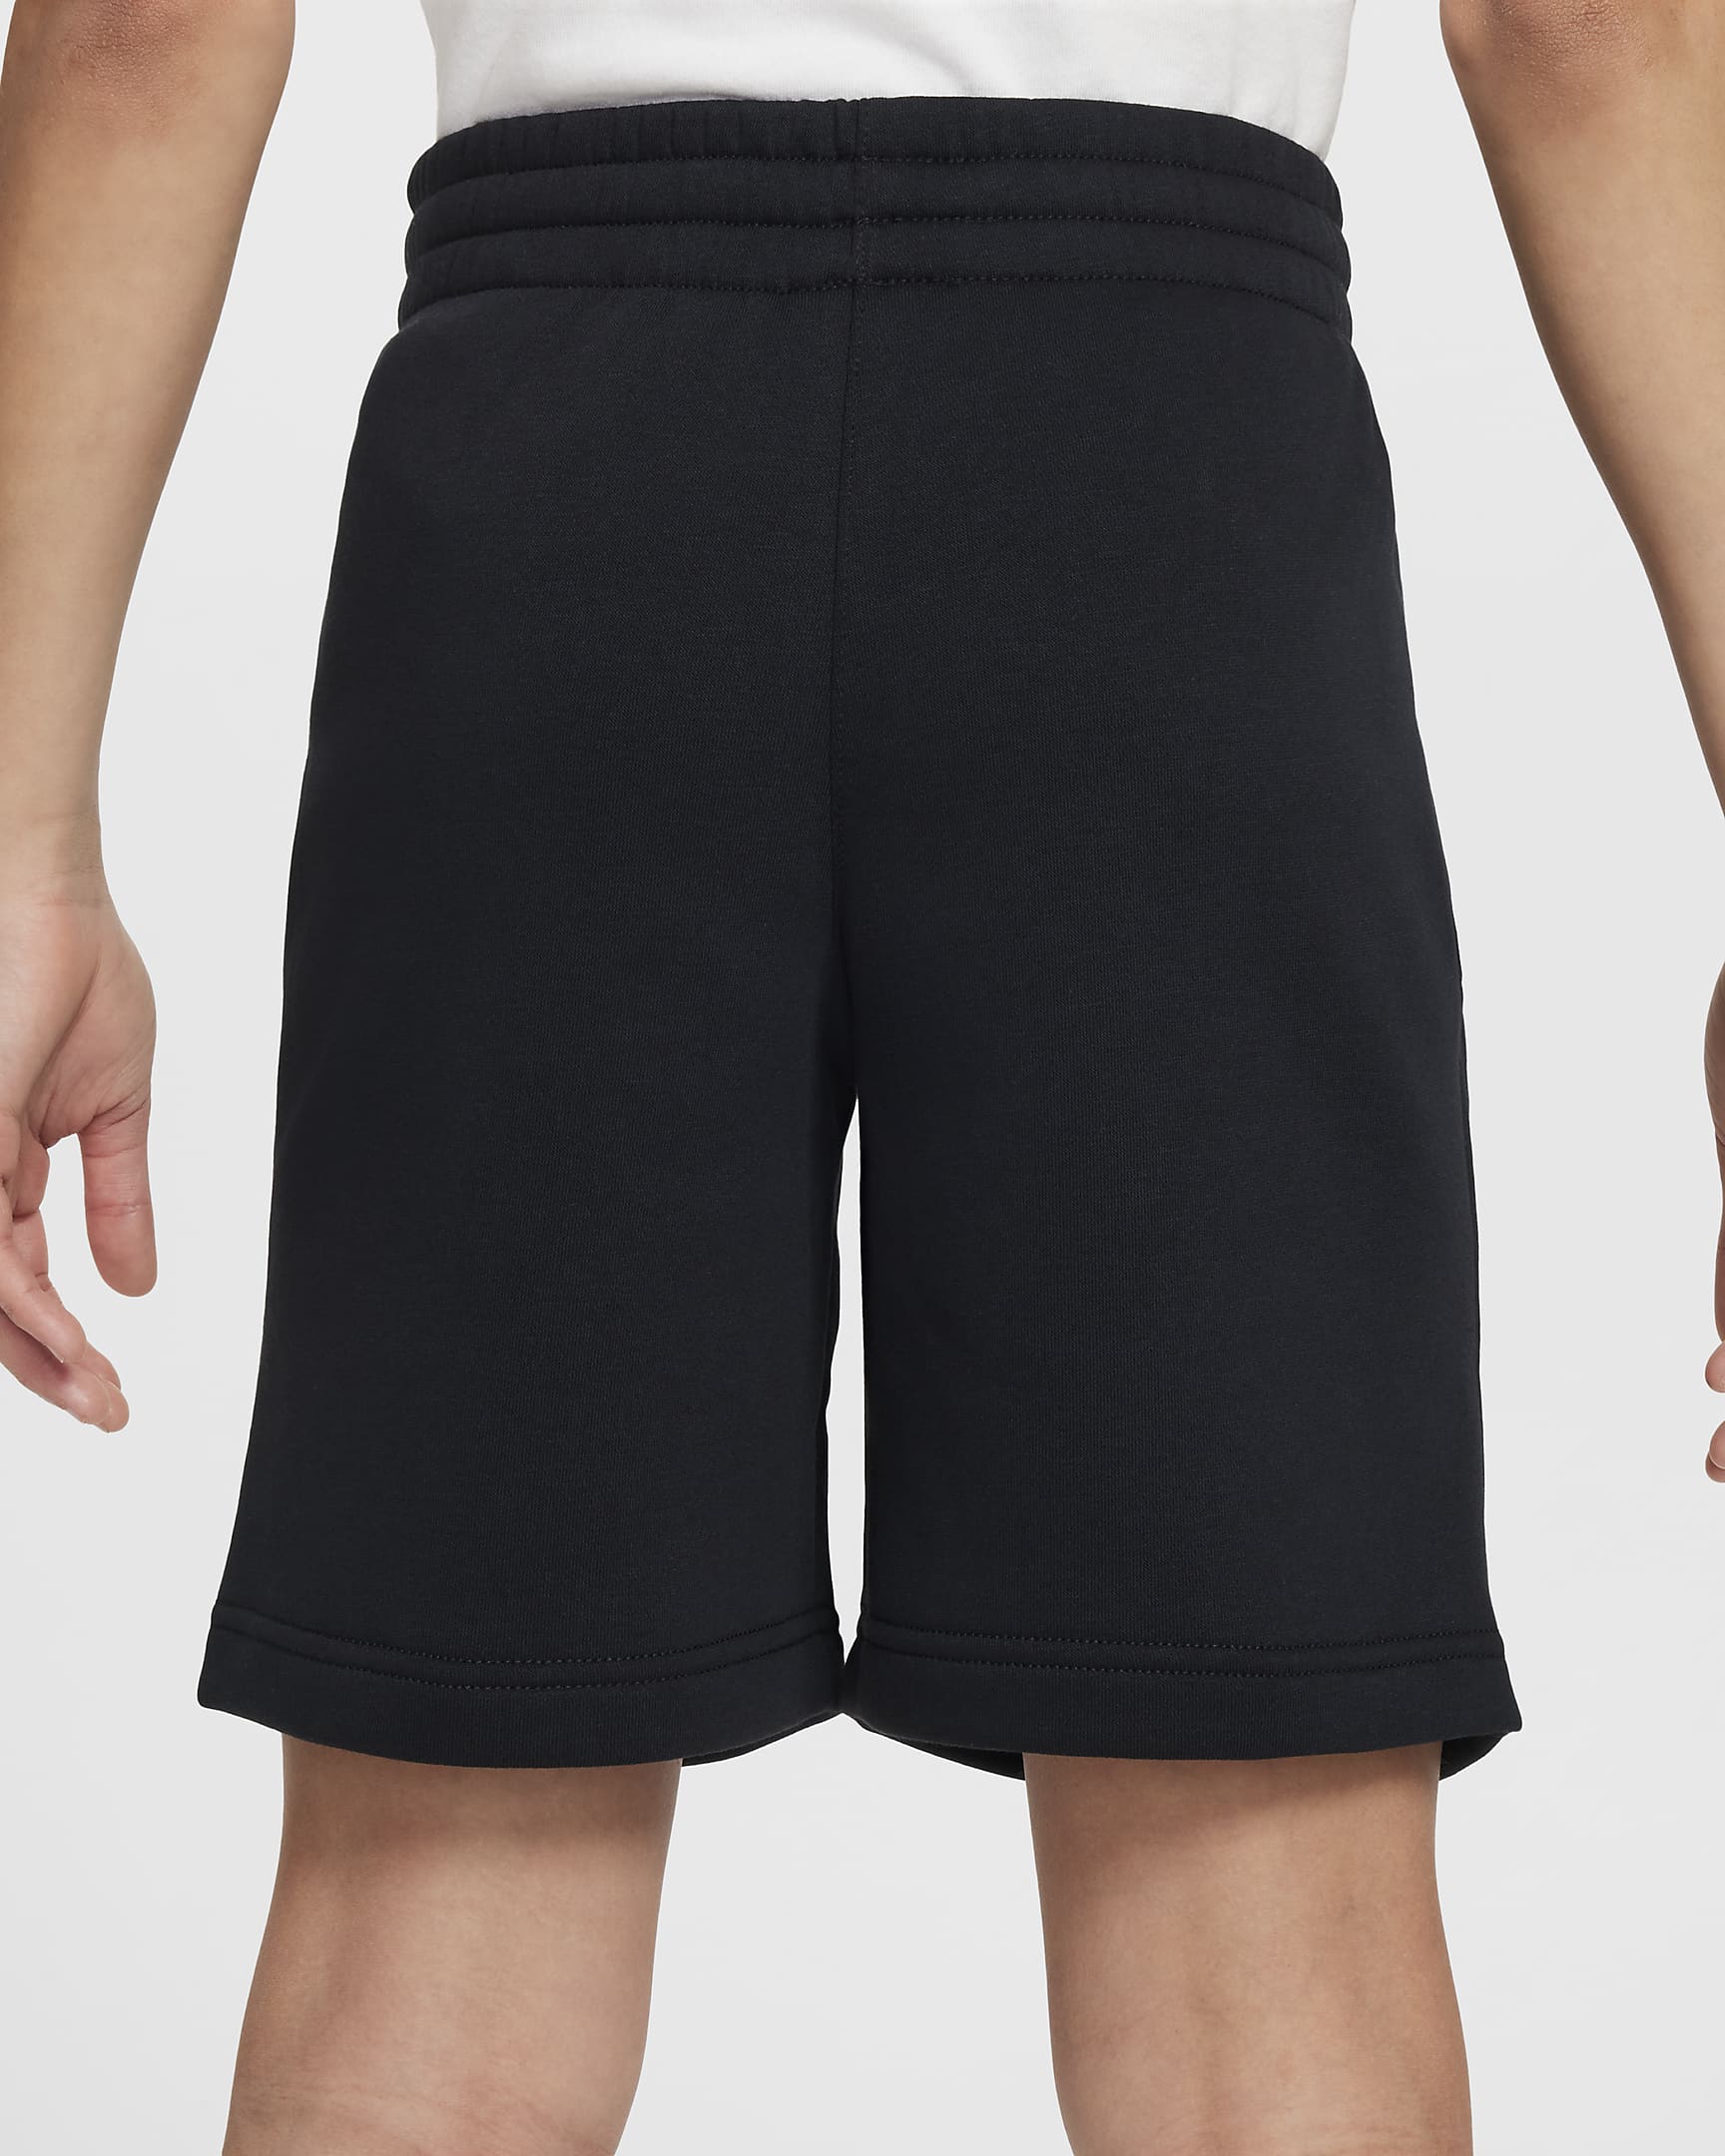 Nike Sportswear Club Fleece Older Kids' Tracksuit Shorts Set - Black/Black/Smoke Grey/White